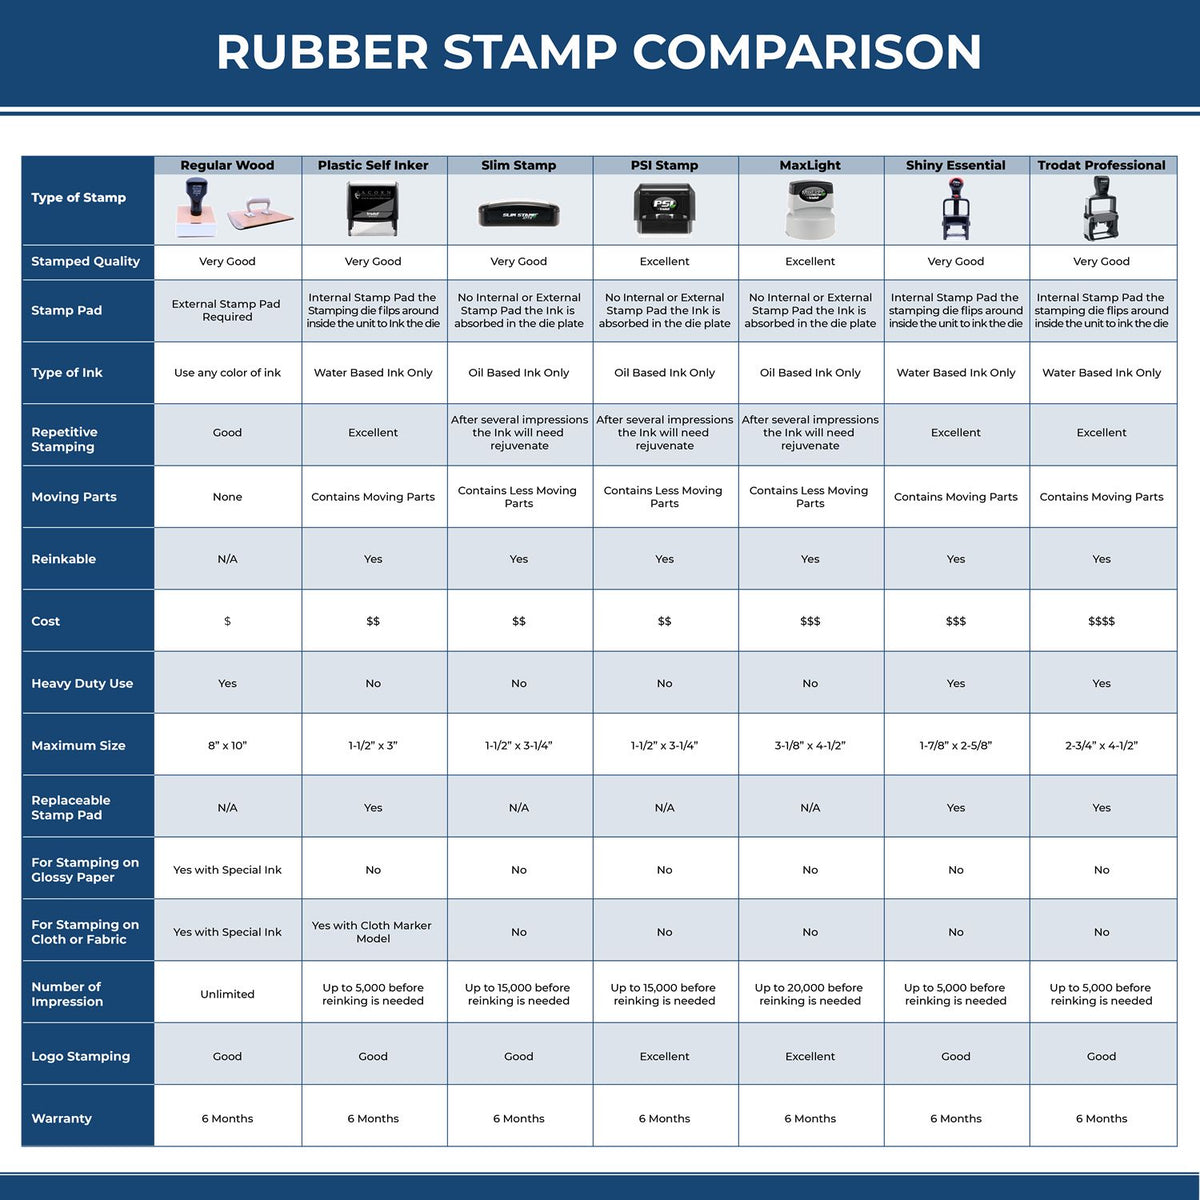 Large Pre-Inked Please Forward Insurance Form Stamp 4983SLIM Rubber Stamp Comparison